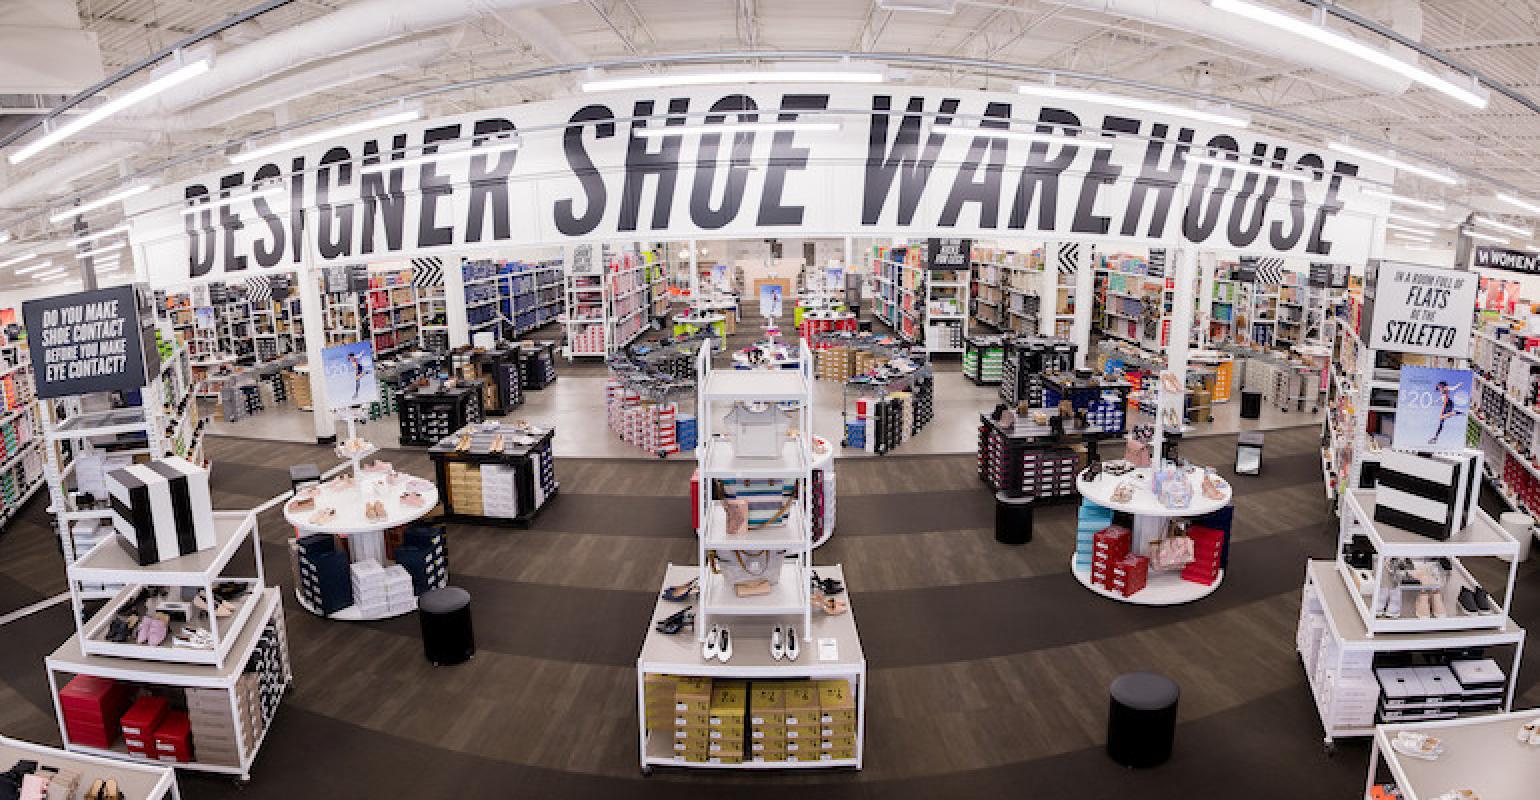 designers shoe warehouse